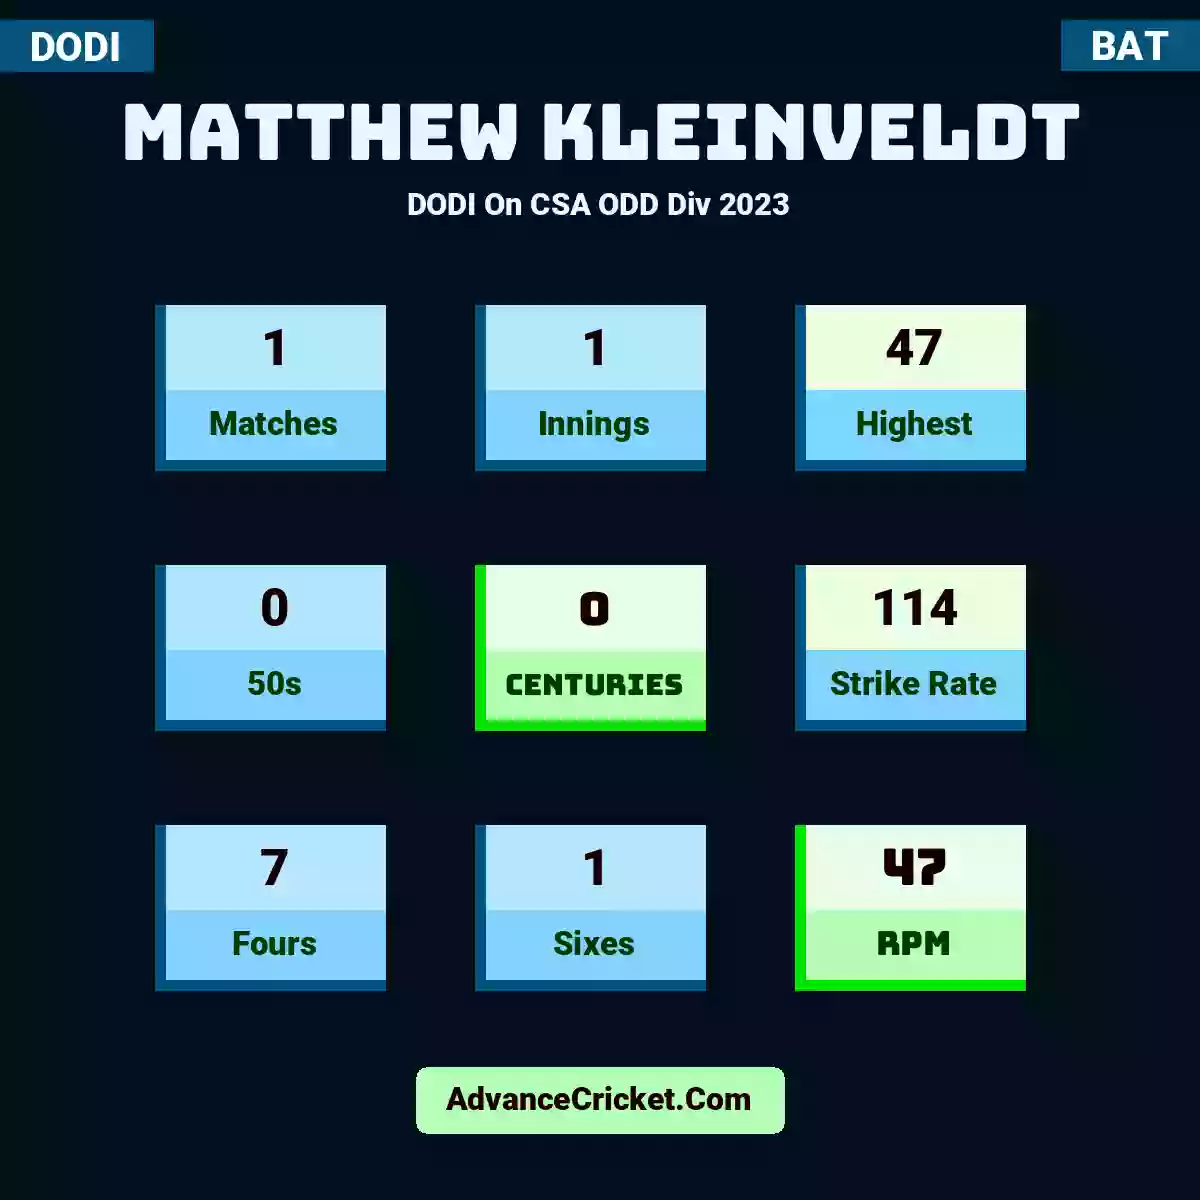 Matthew Kleinveldt DODI  On CSA ODD Div 2023, Matthew Kleinveldt played 1 matches, scored 47 runs as highest, 0 half-centuries, and 0 centuries, with a strike rate of 114. M.Kleinveldt hit 7 fours and 1 sixes, with an RPM of 47.